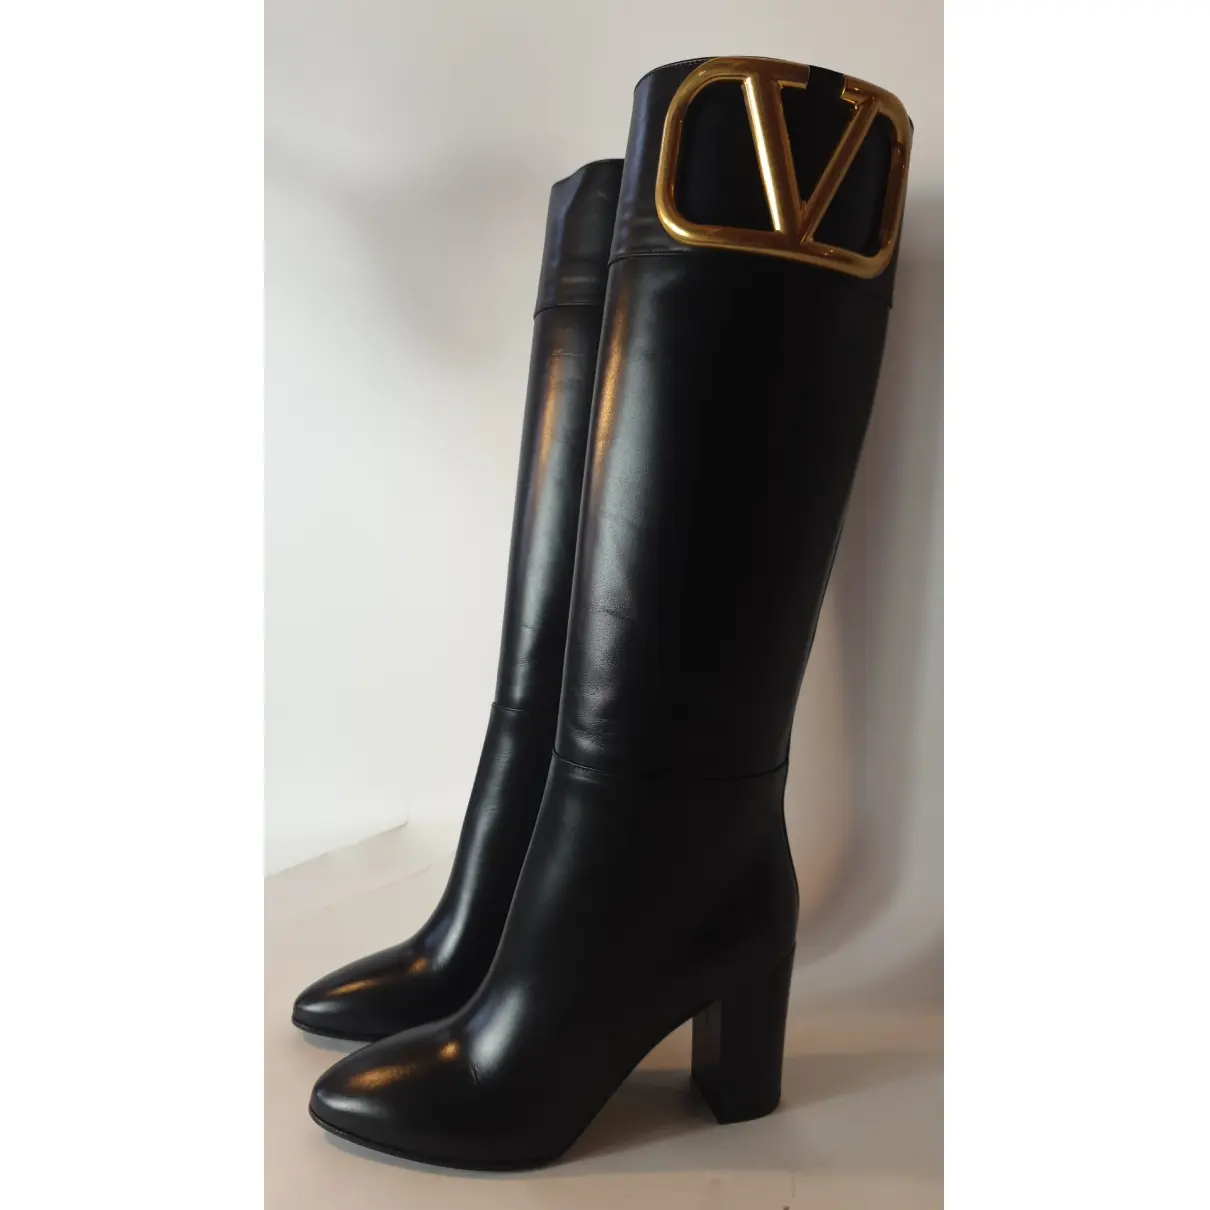 VLogo leather boots Valentino Garavani